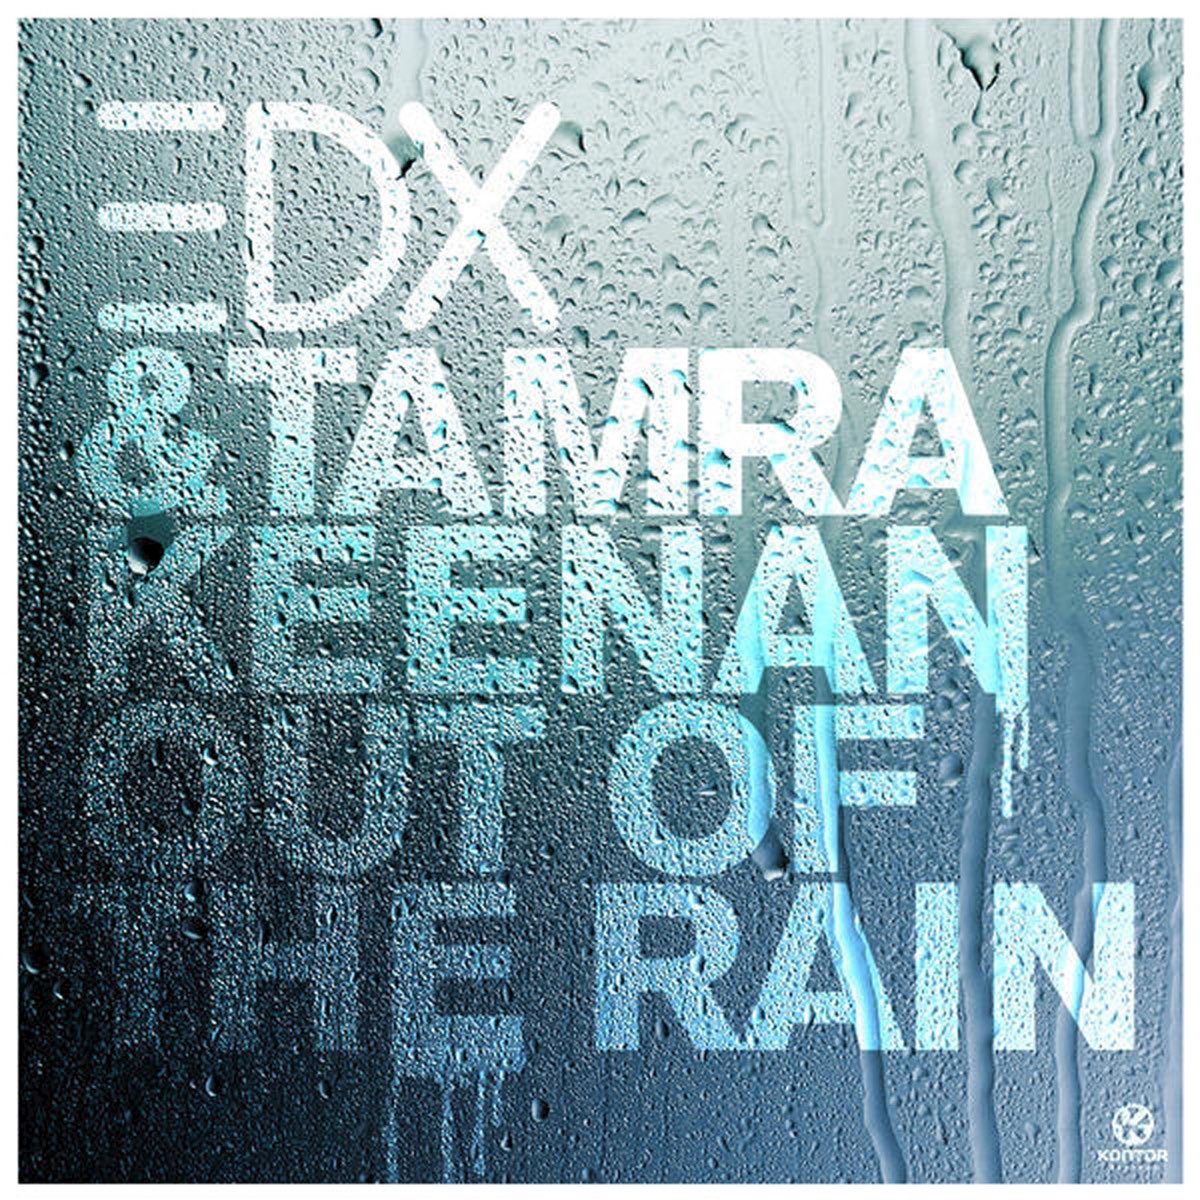 Rain out now. The Rain Remix. Rain out. EDX & Tamra Keenan - out of the Rain (Sebastian Krieg Remix). The Rain (feat. Greenspree).